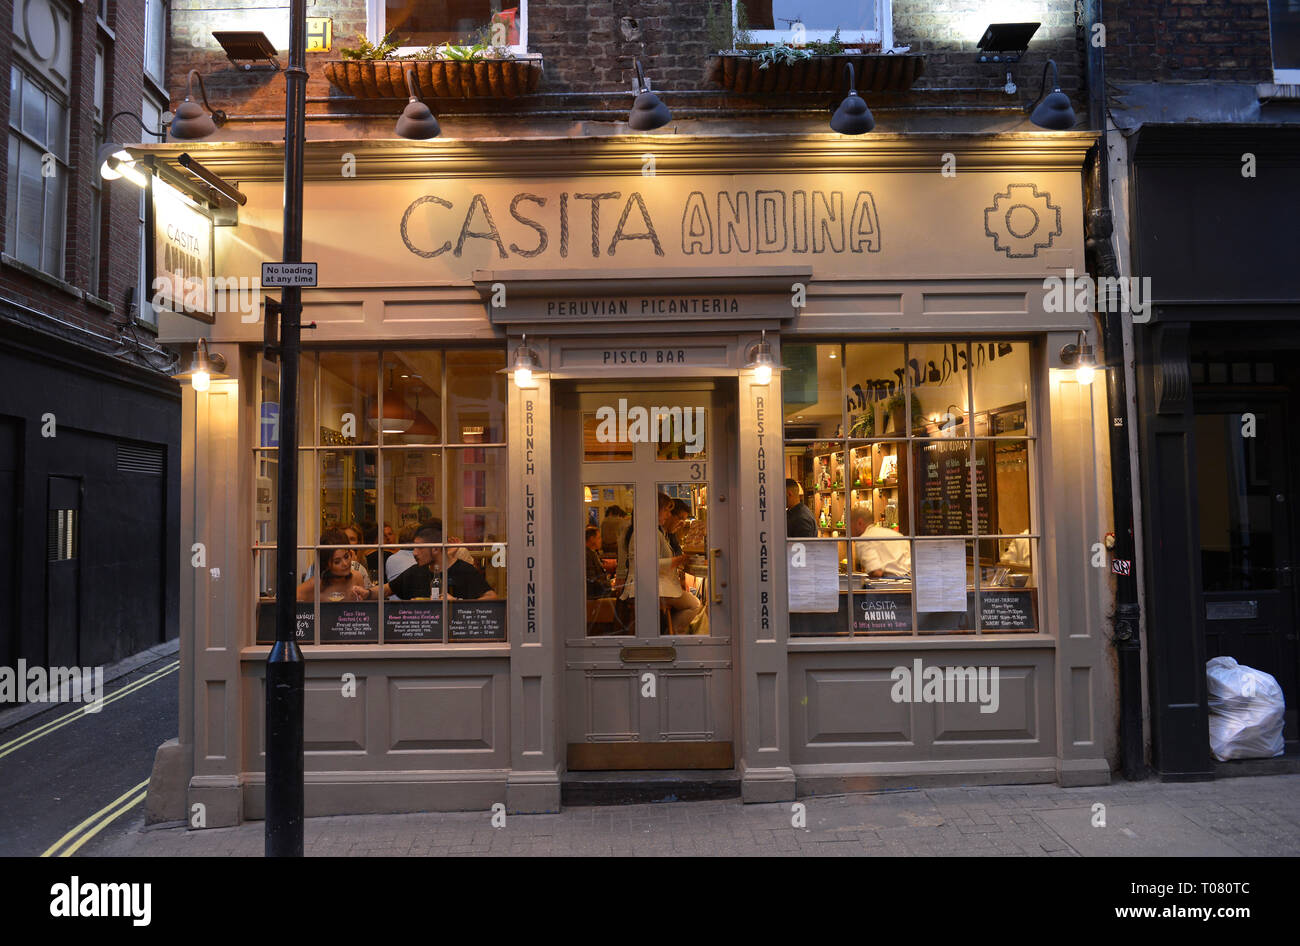 Restaurante, Casita Andina, Gran molino st, Soho, Londres, Inglaterra, Grossbritannien Foto de stock